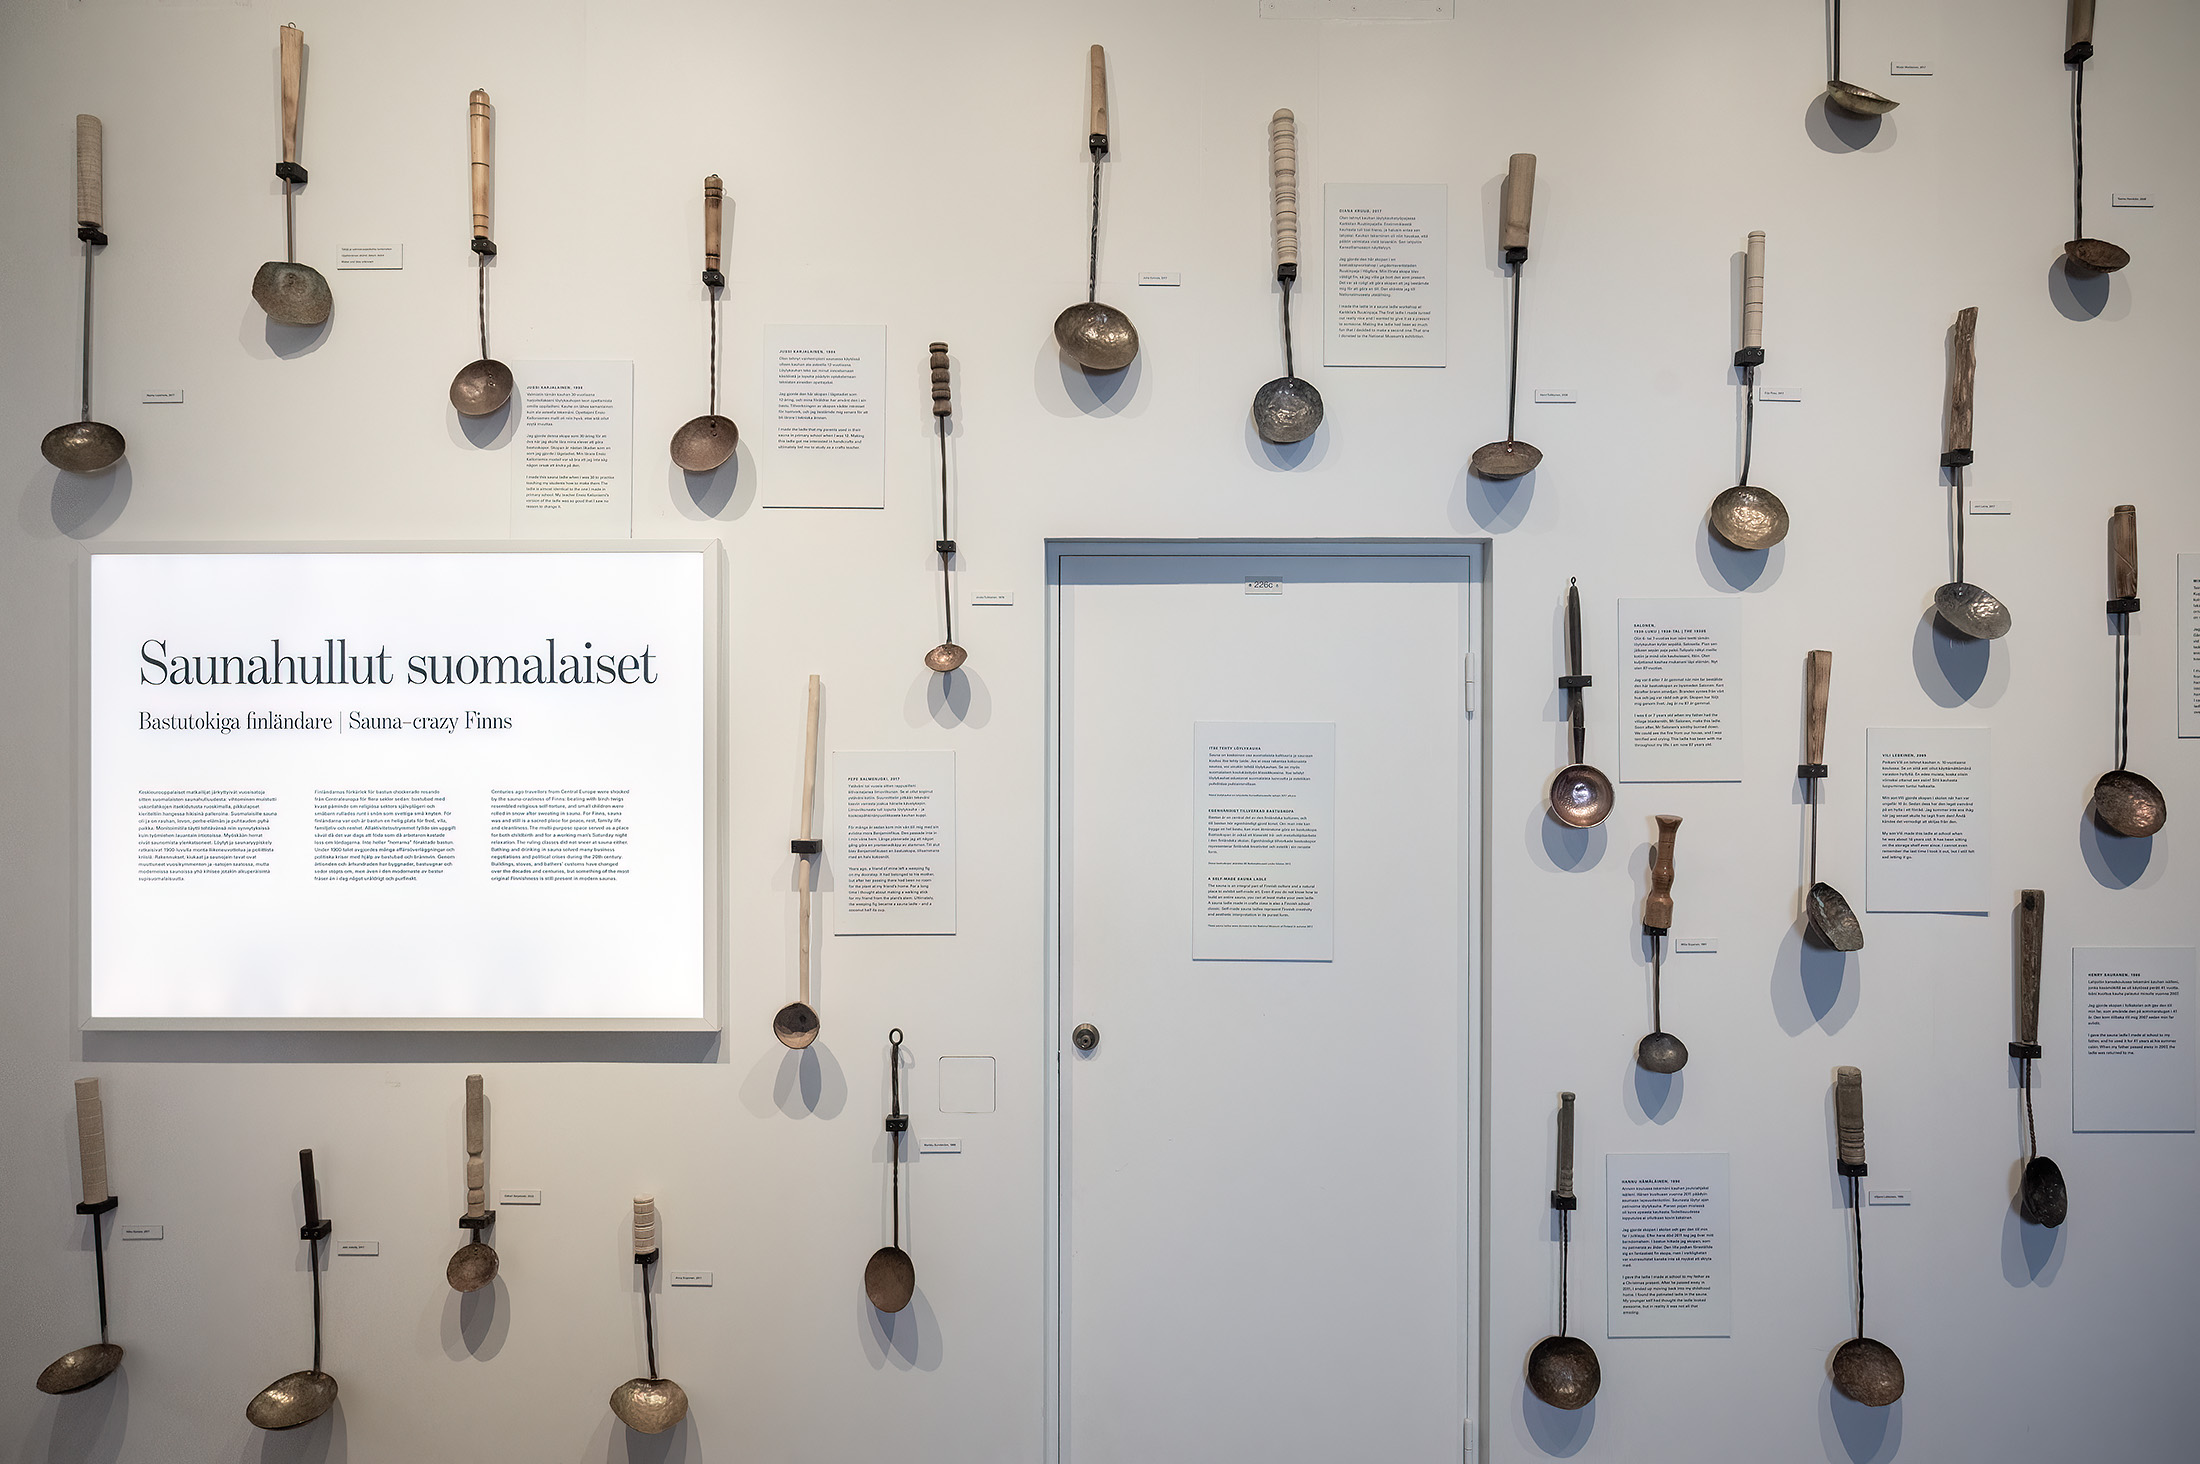 Saunatilbehør, Finlands Nationalmuseum, Helsinki